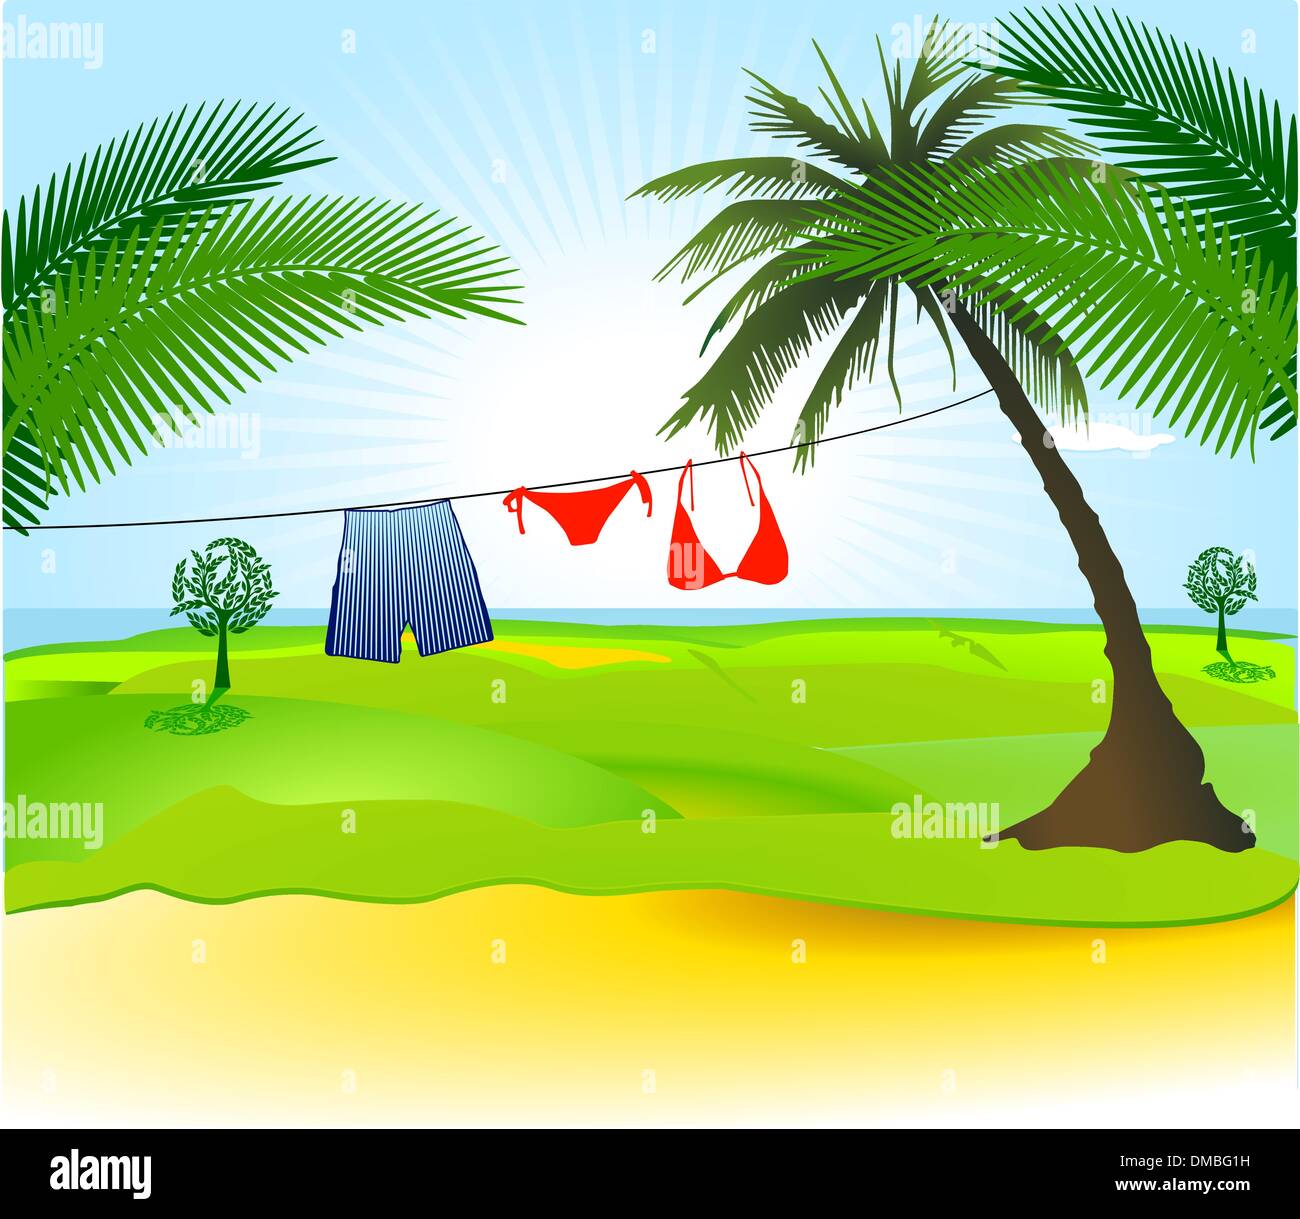 bikini, bathing suit and palm tree Stock Vector